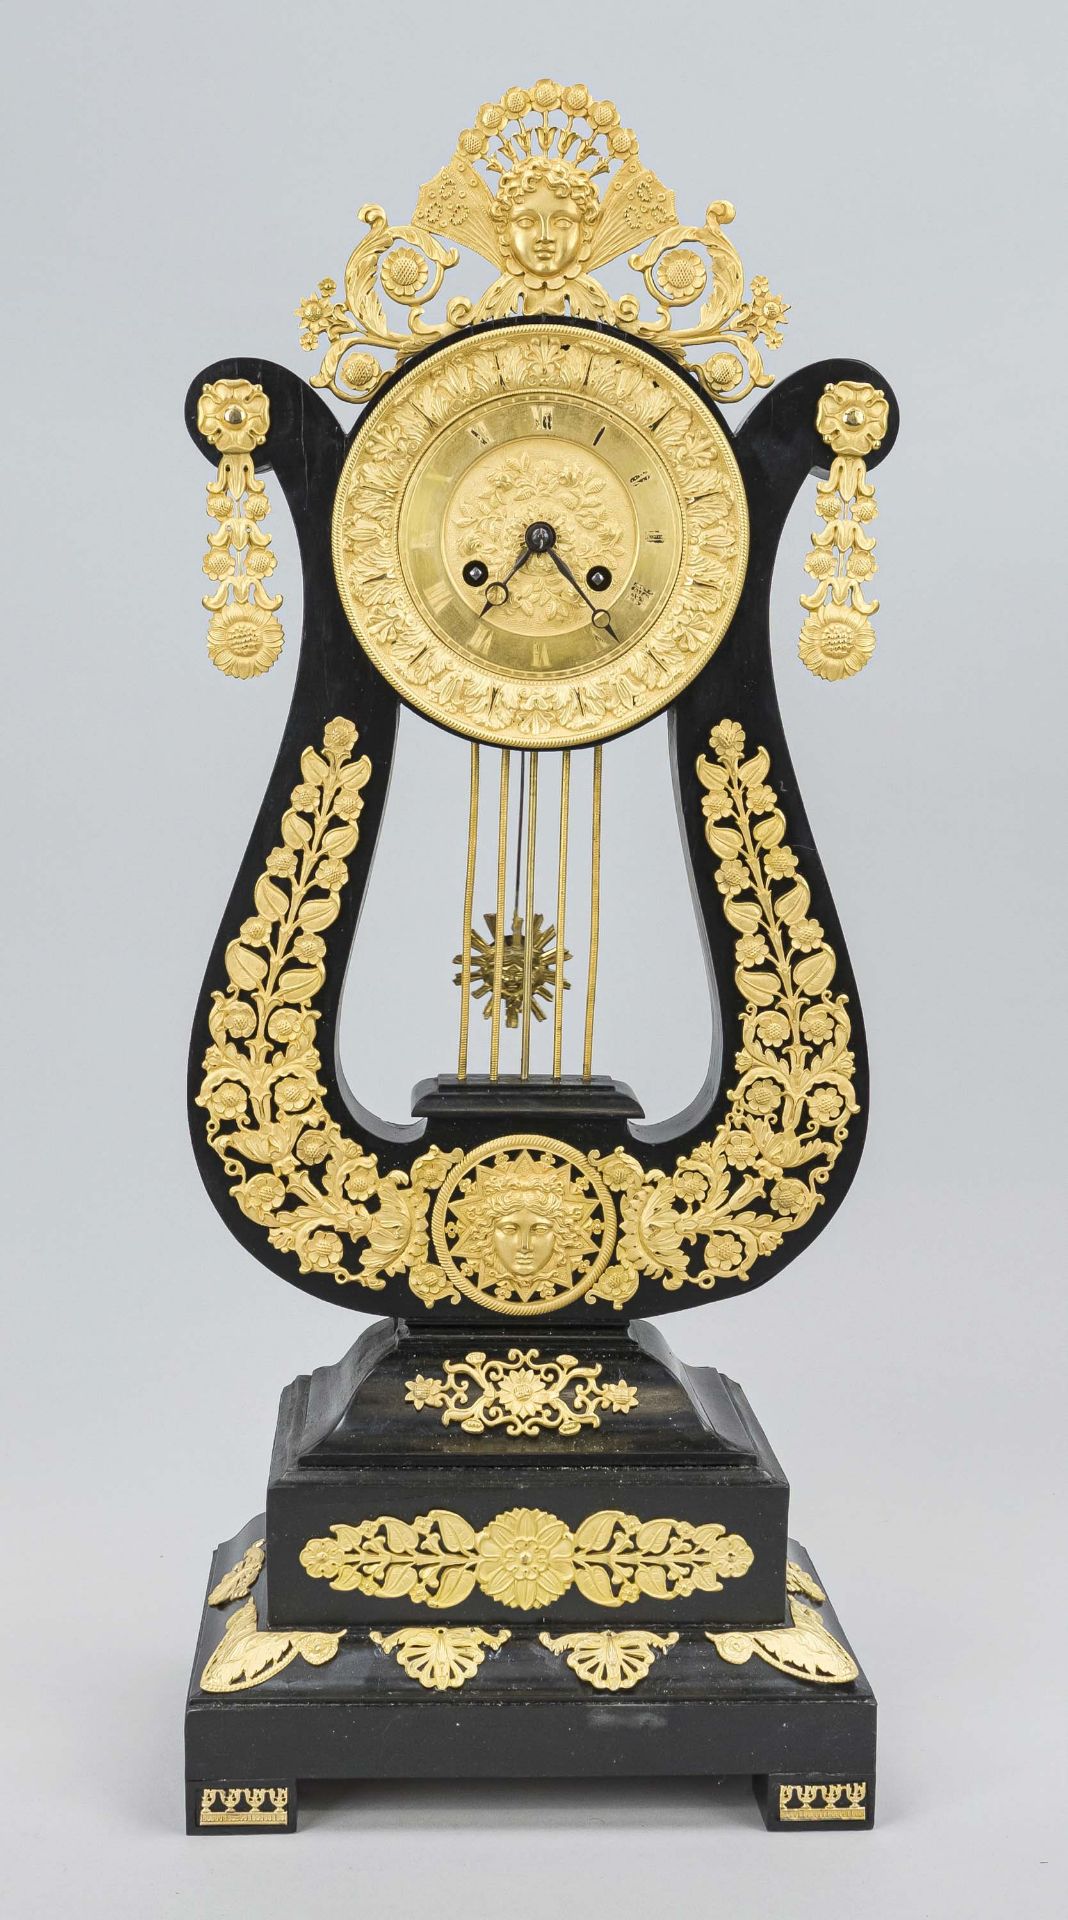 Lyre pendulum, 1st half 19th century, ebonized wood, gilded bronze applications, polished and